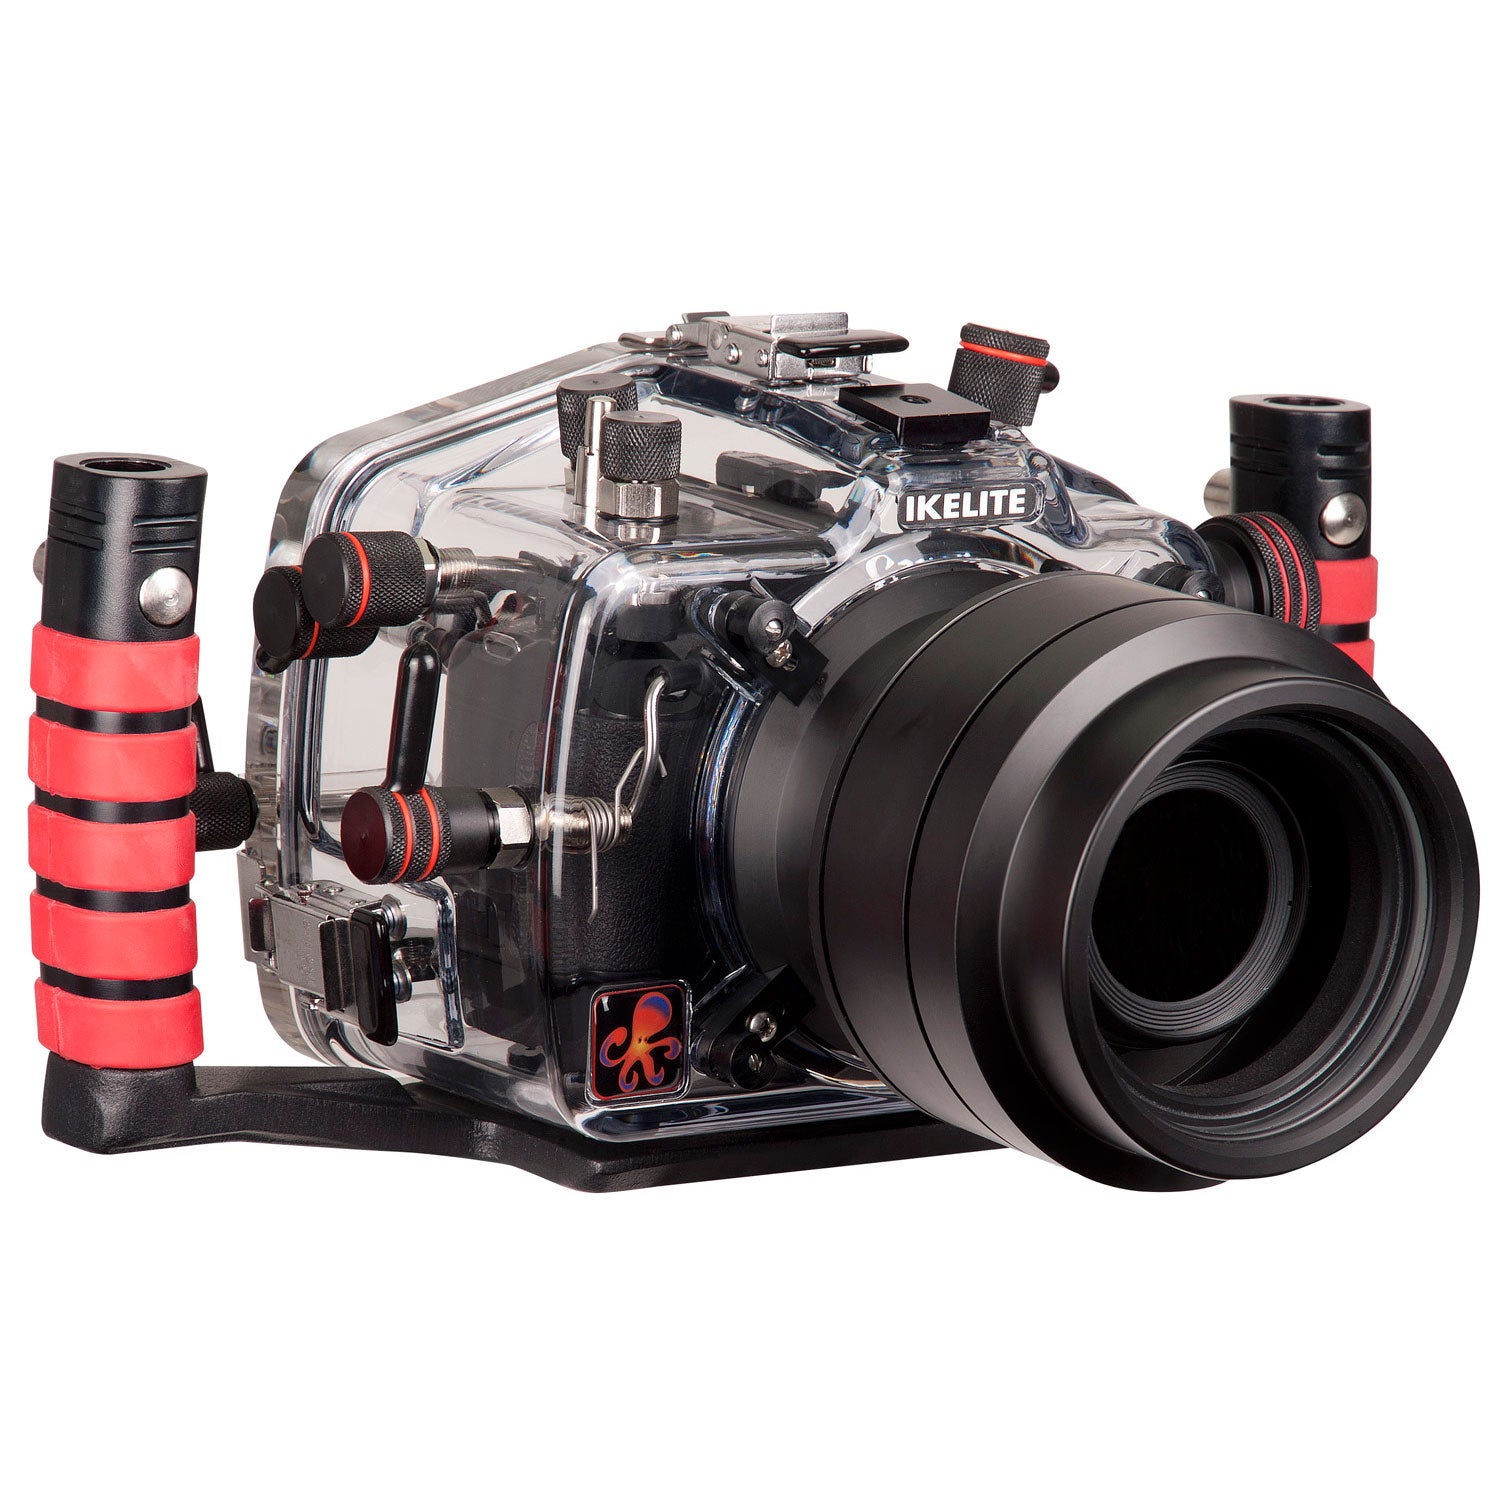 200FL Underwater TTL Housing for Canon EOS 450D Rebel XSi (Kiss X2), Canon EOS 500D Rebel T1i (Kiss X3) DSLR Cameras